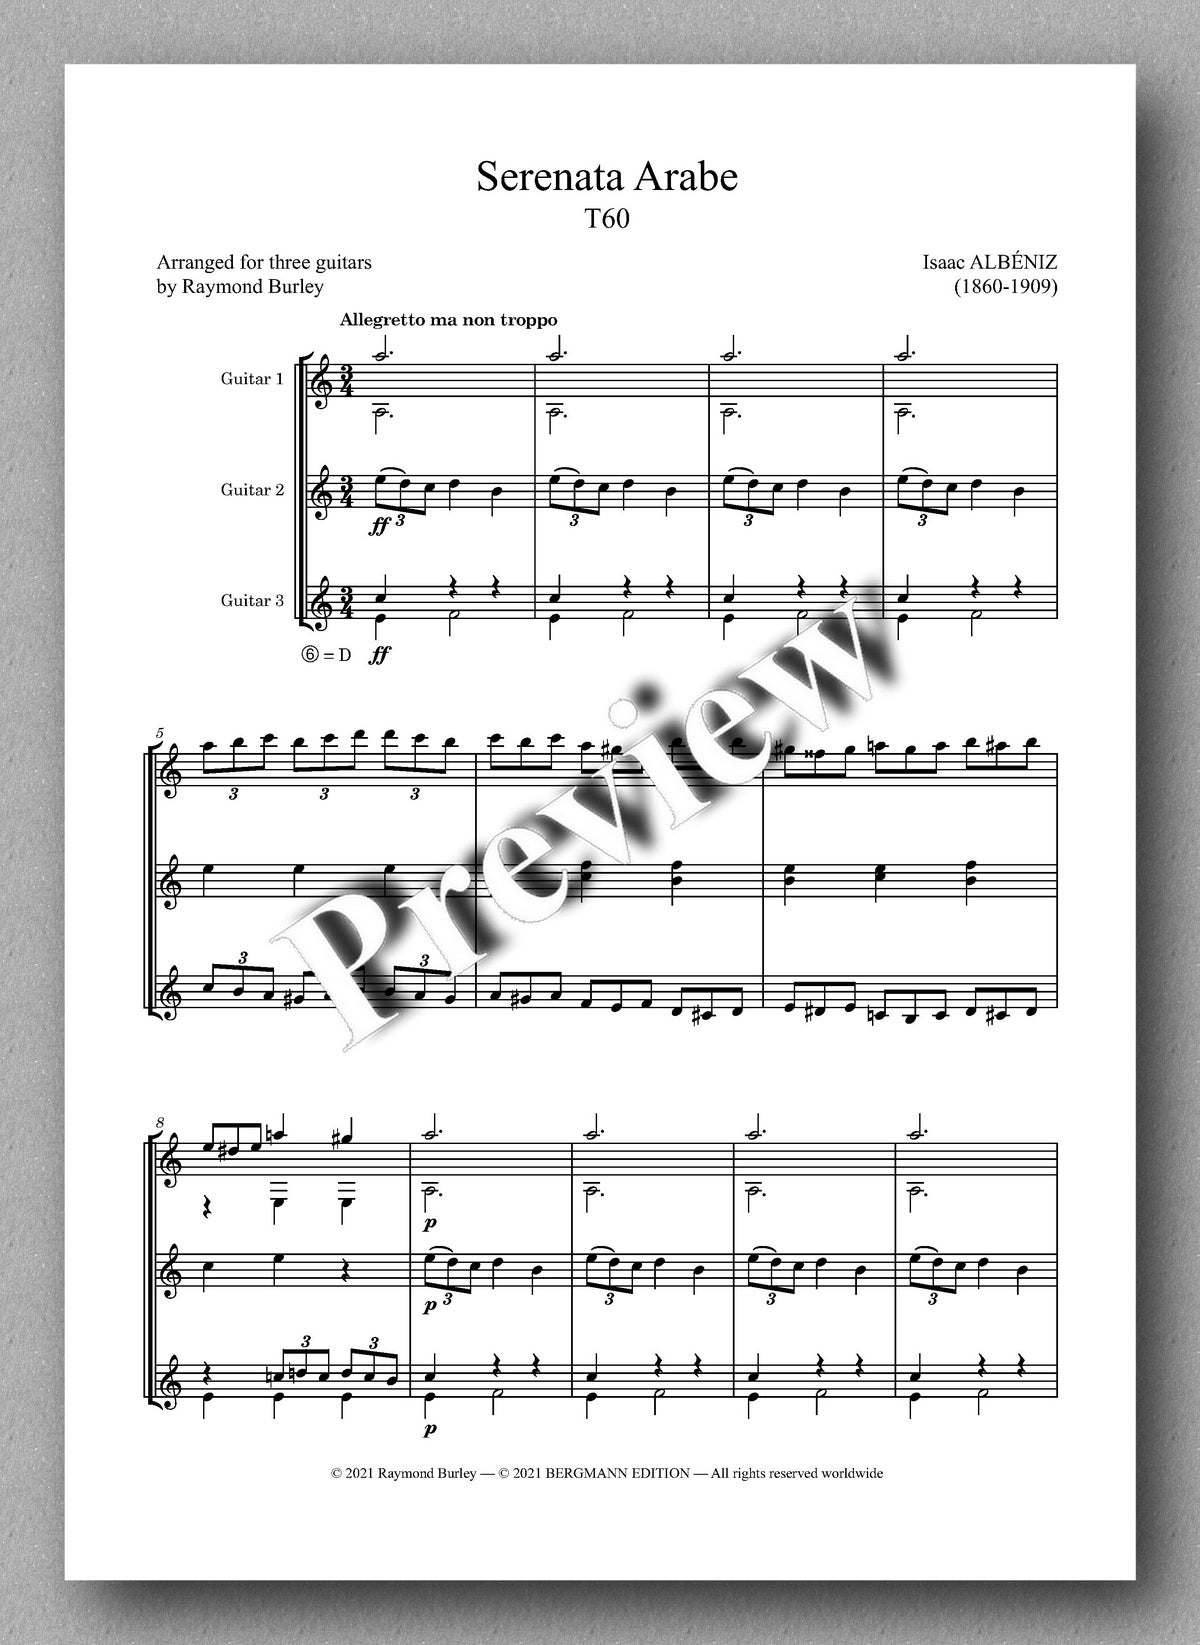 Albéniz-Burley, Serenata Arabe - music score 1